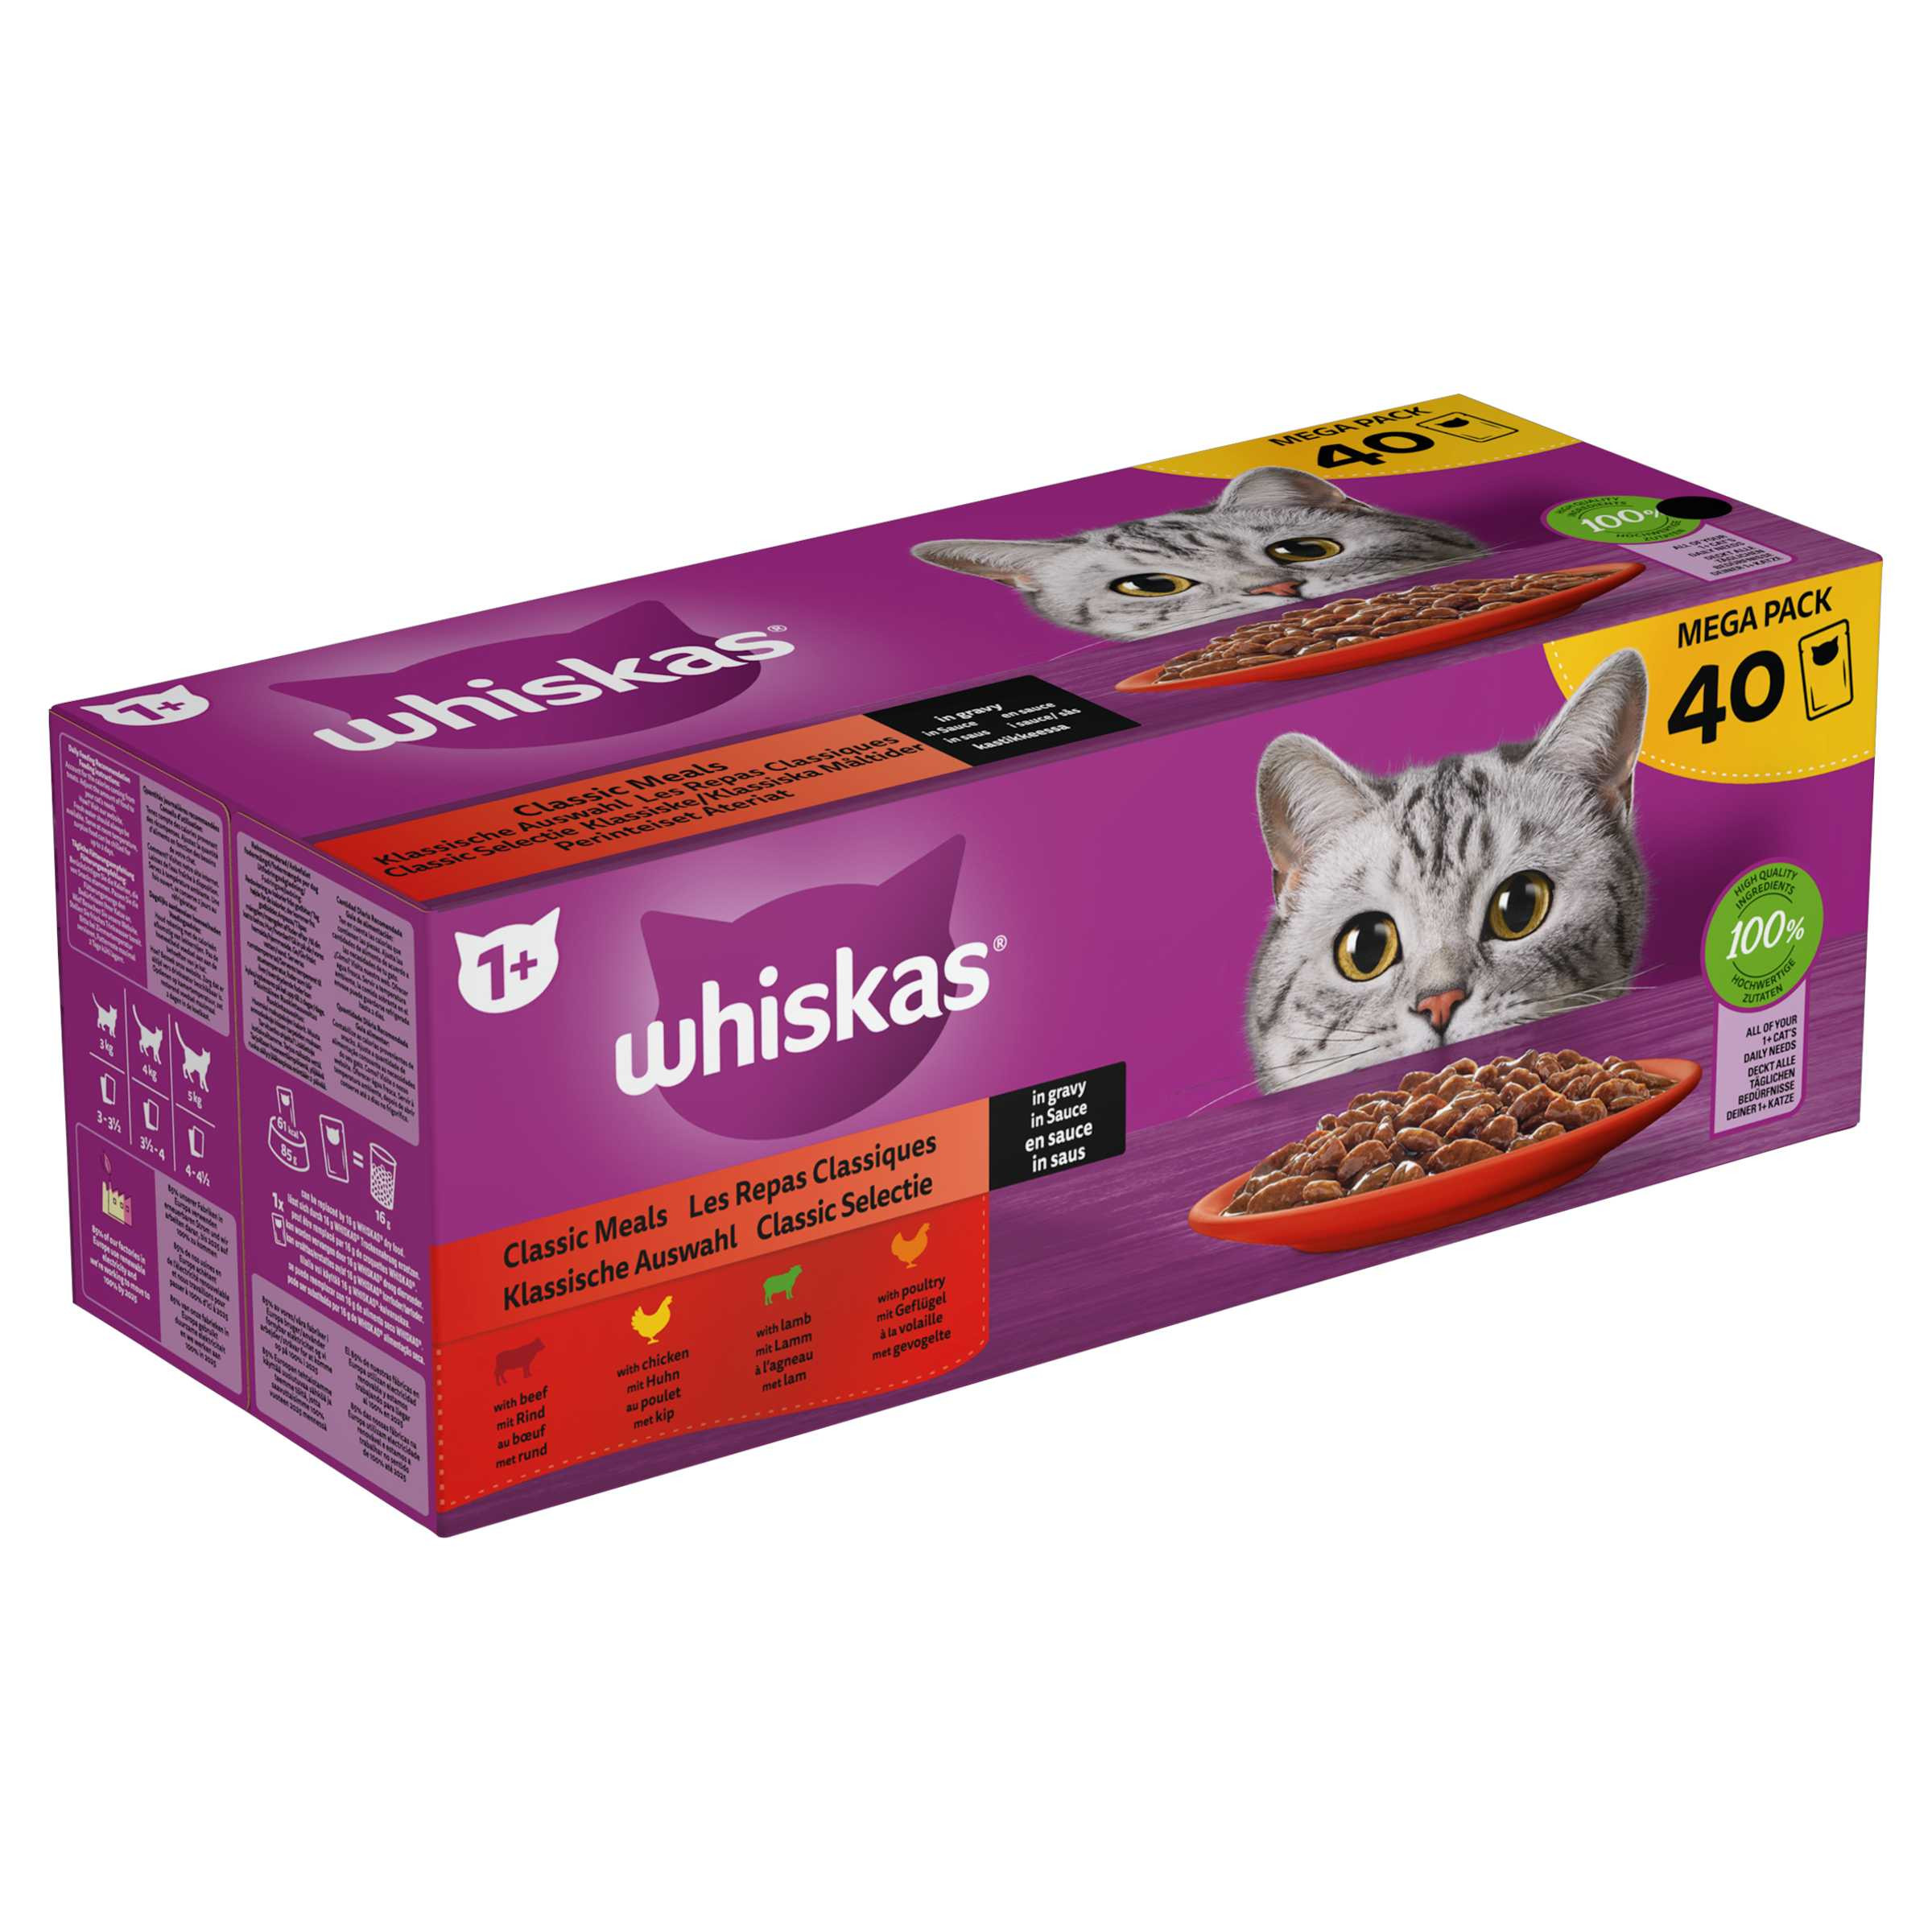 Whiskas 1+  Classic Selectie Groenten pouches multipack 40 x 100g